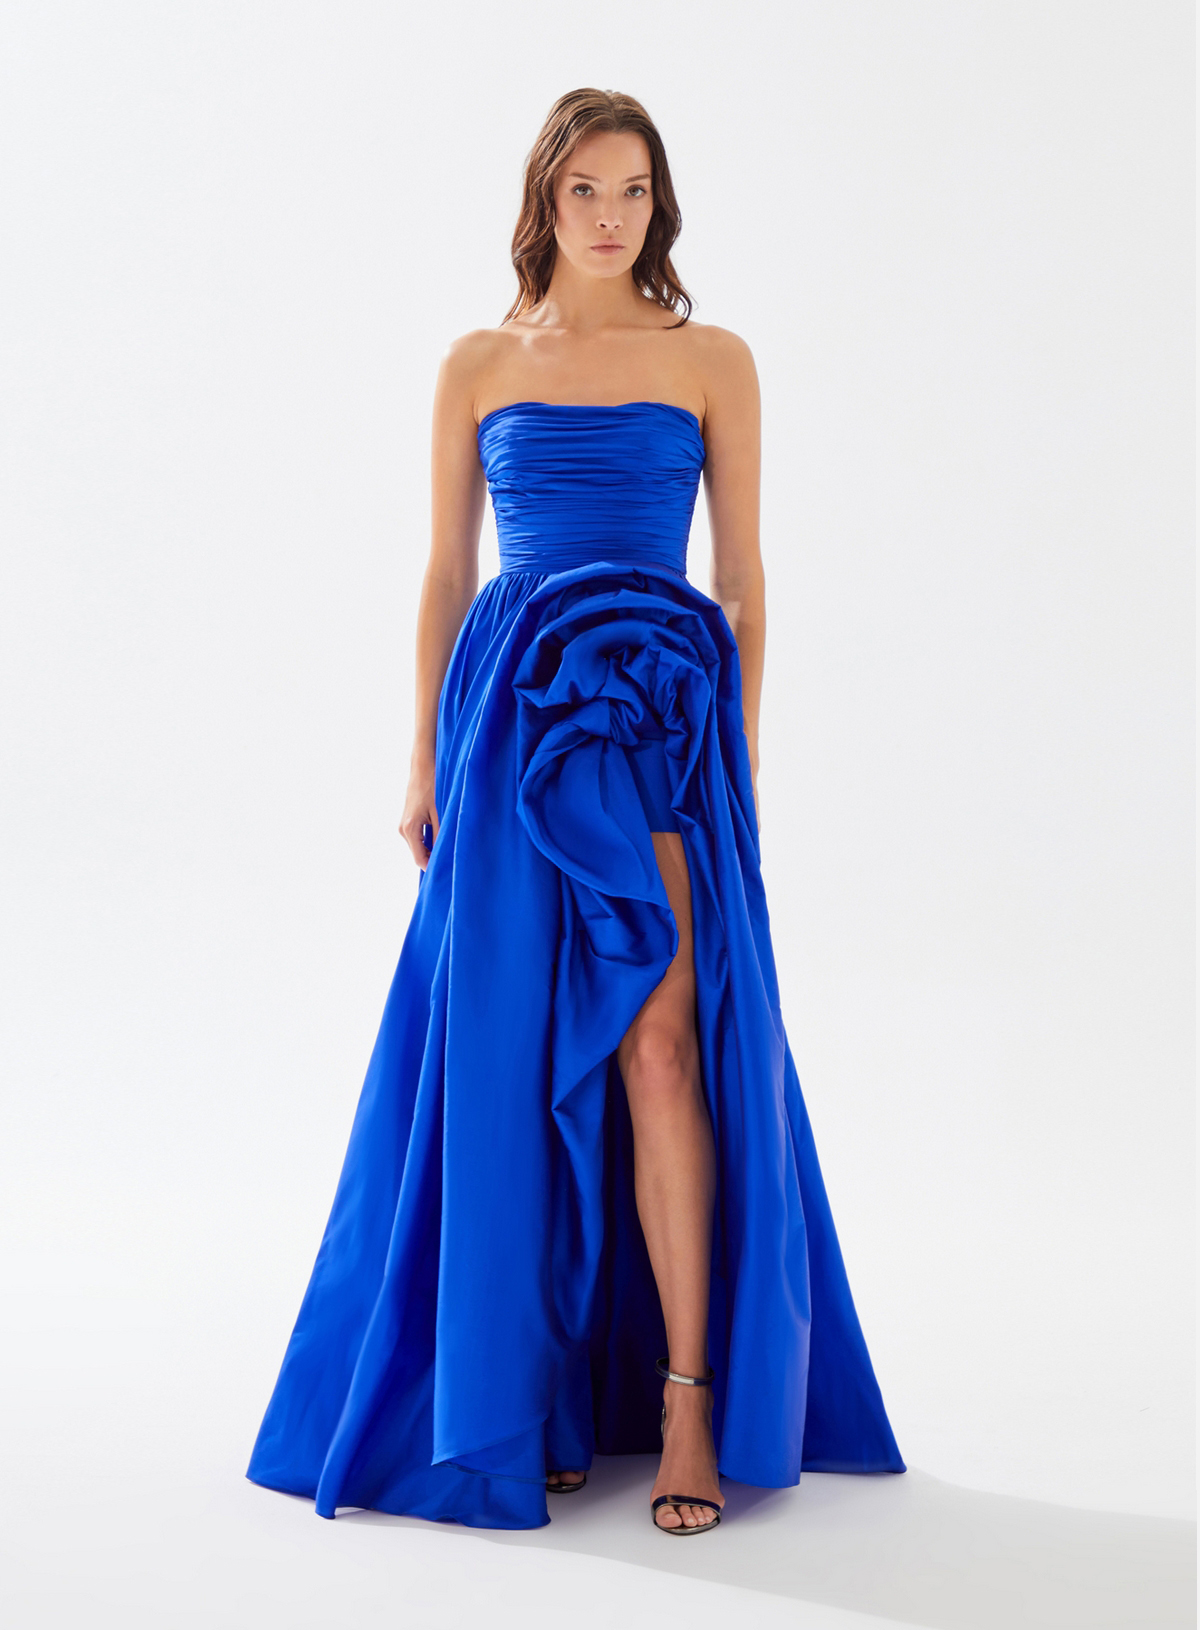 Picture of Maıa Royal Blue Dress